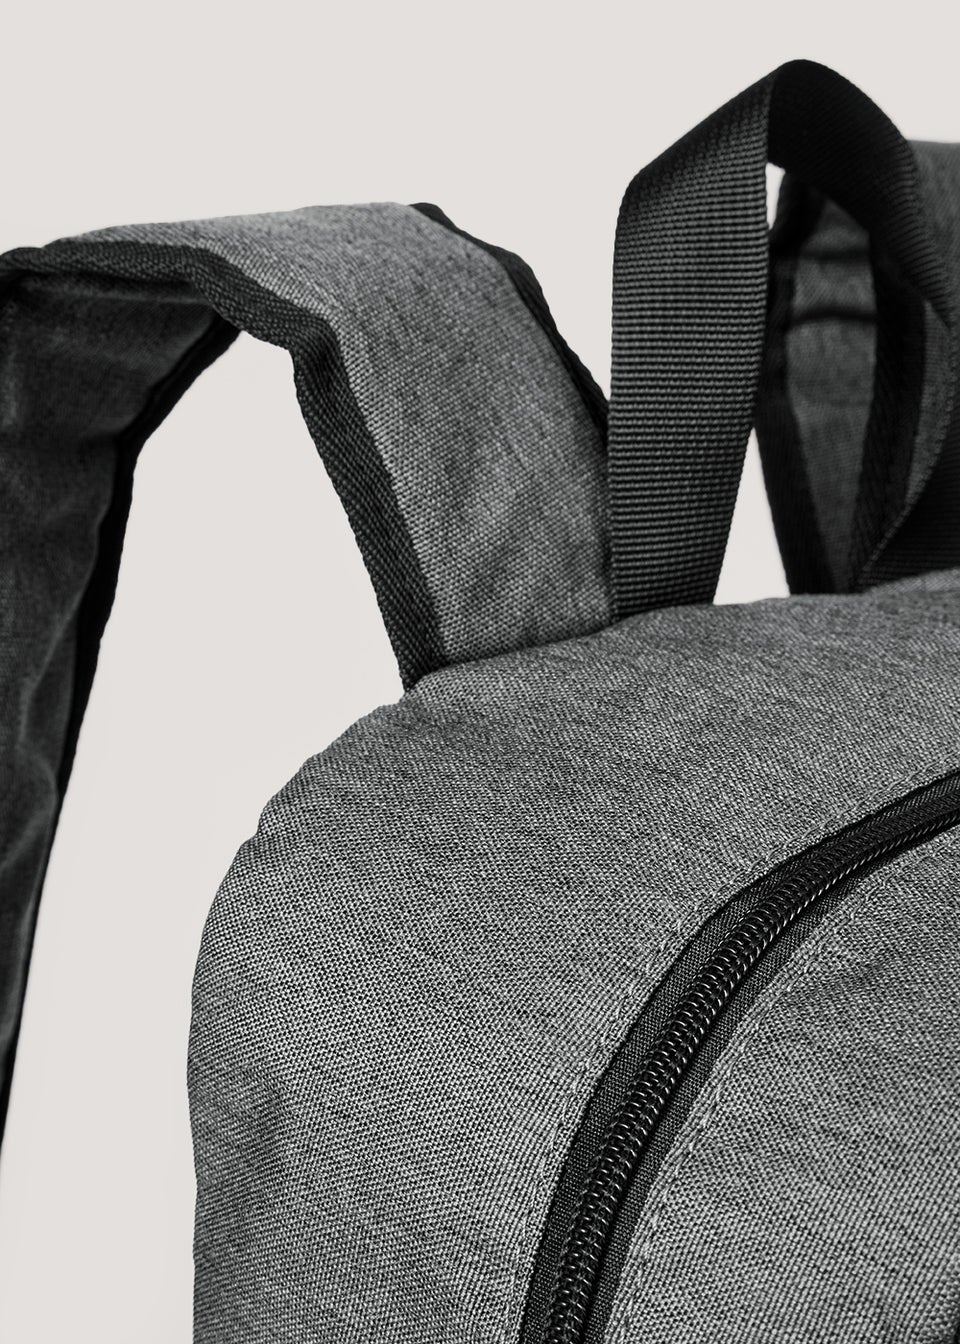 Charcoal Backpack (29.5cm x 14.5cm)